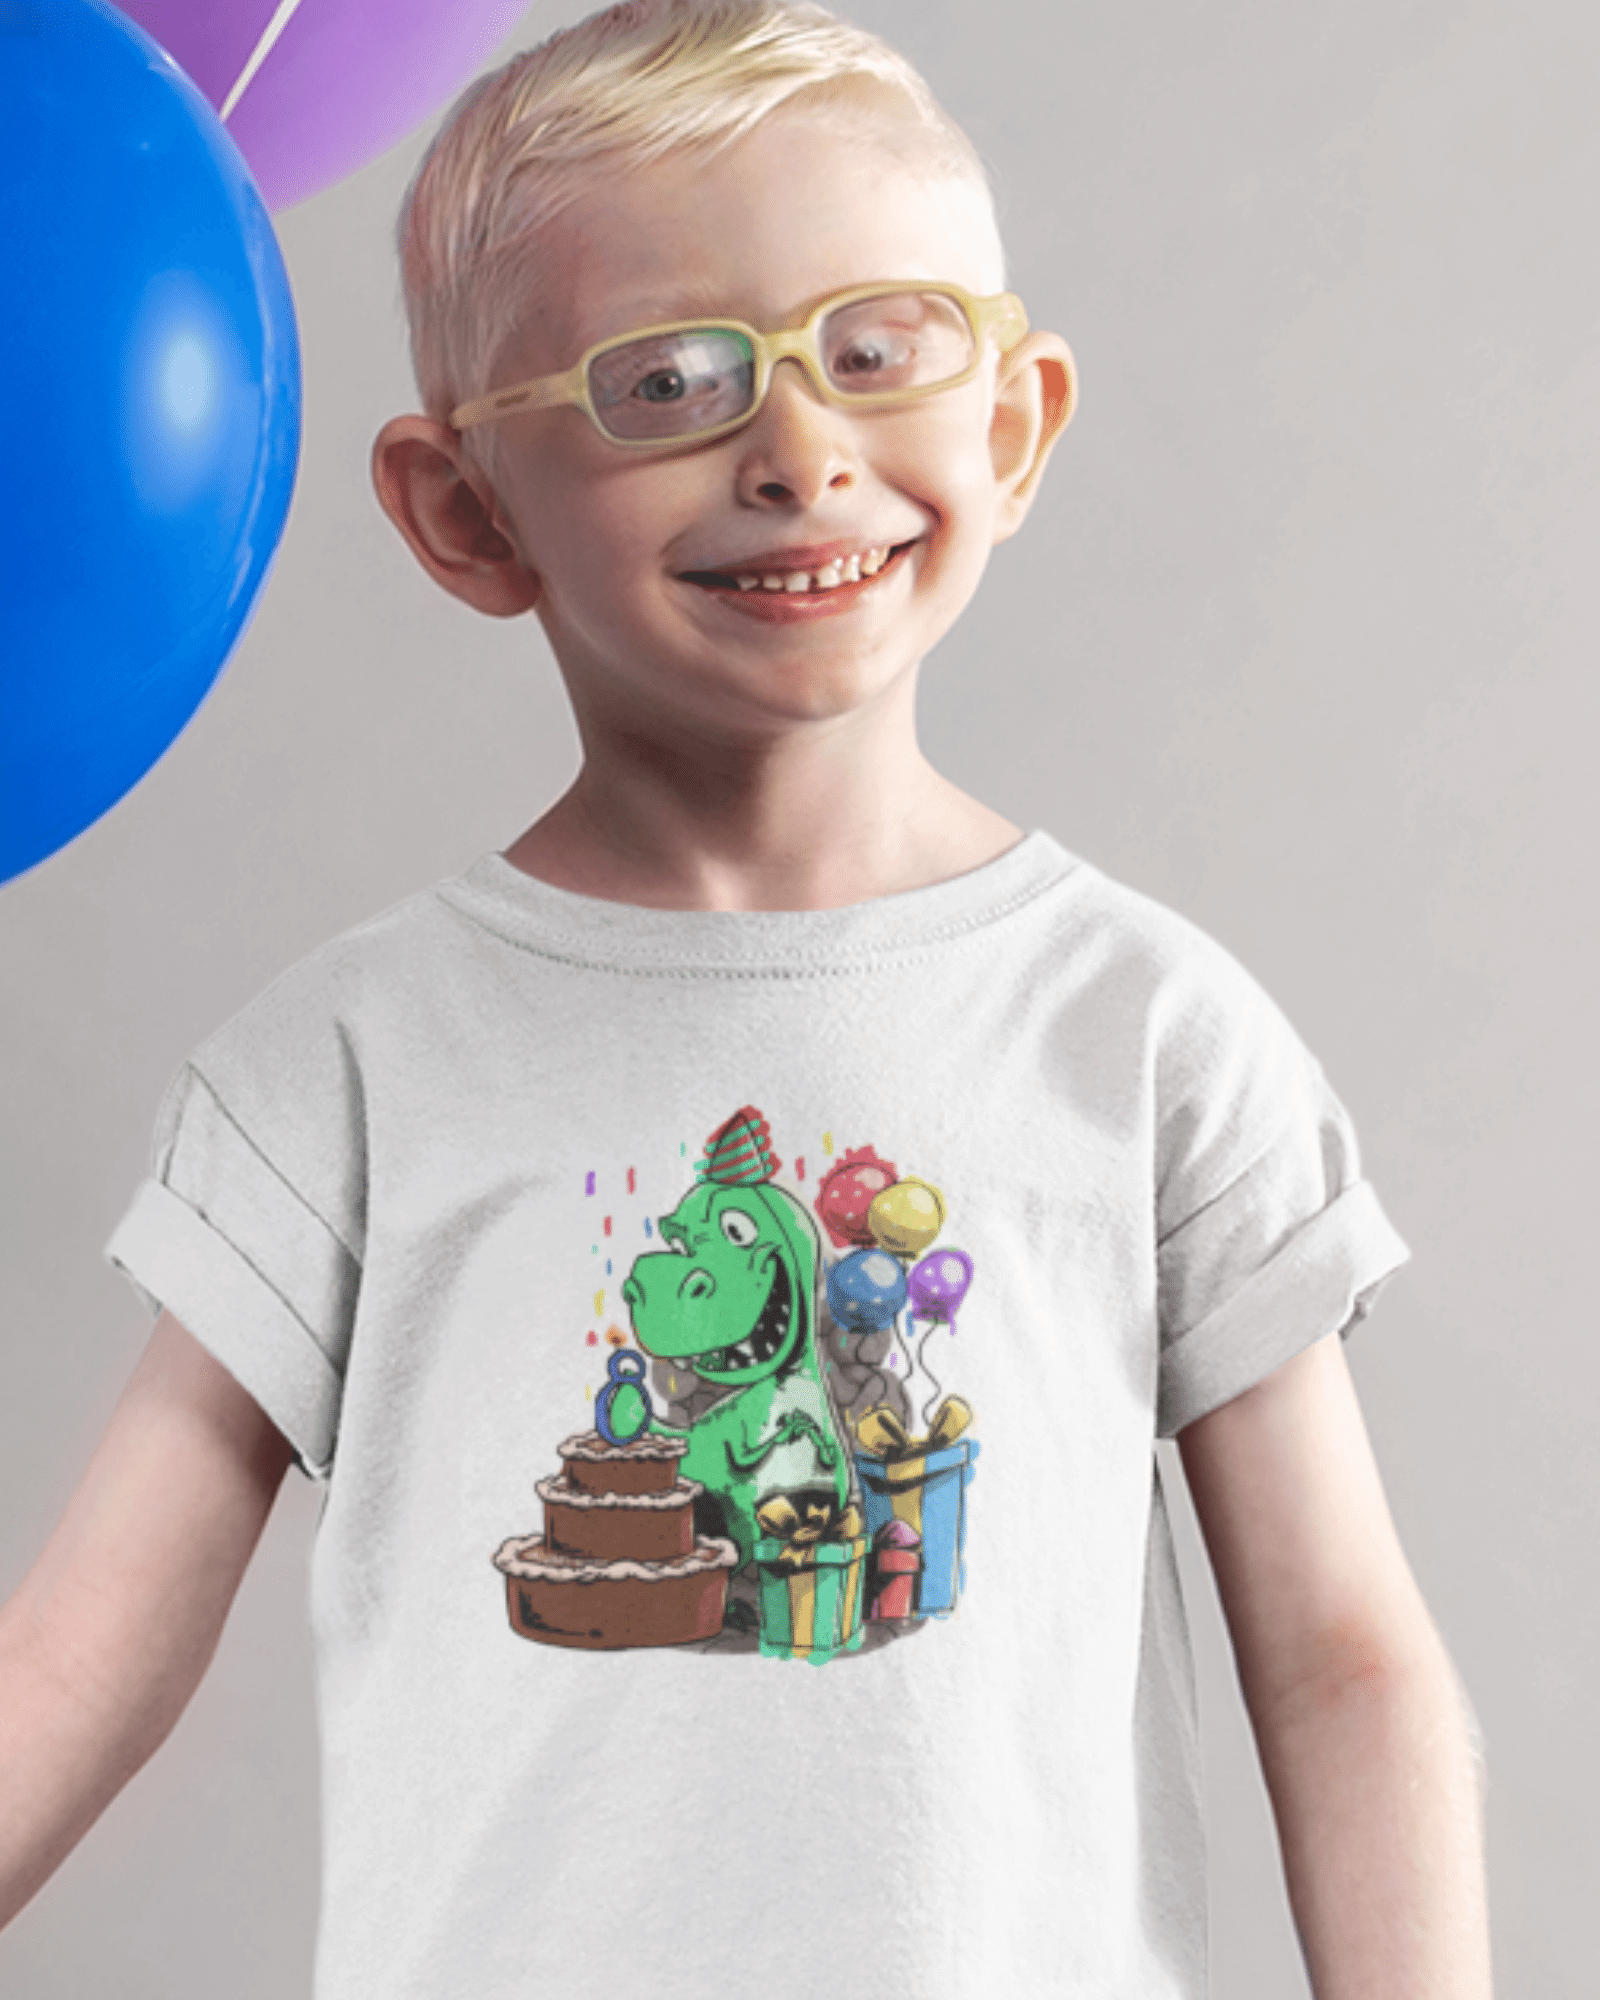 boy wearing a birthday shirt with a dinosaur on it